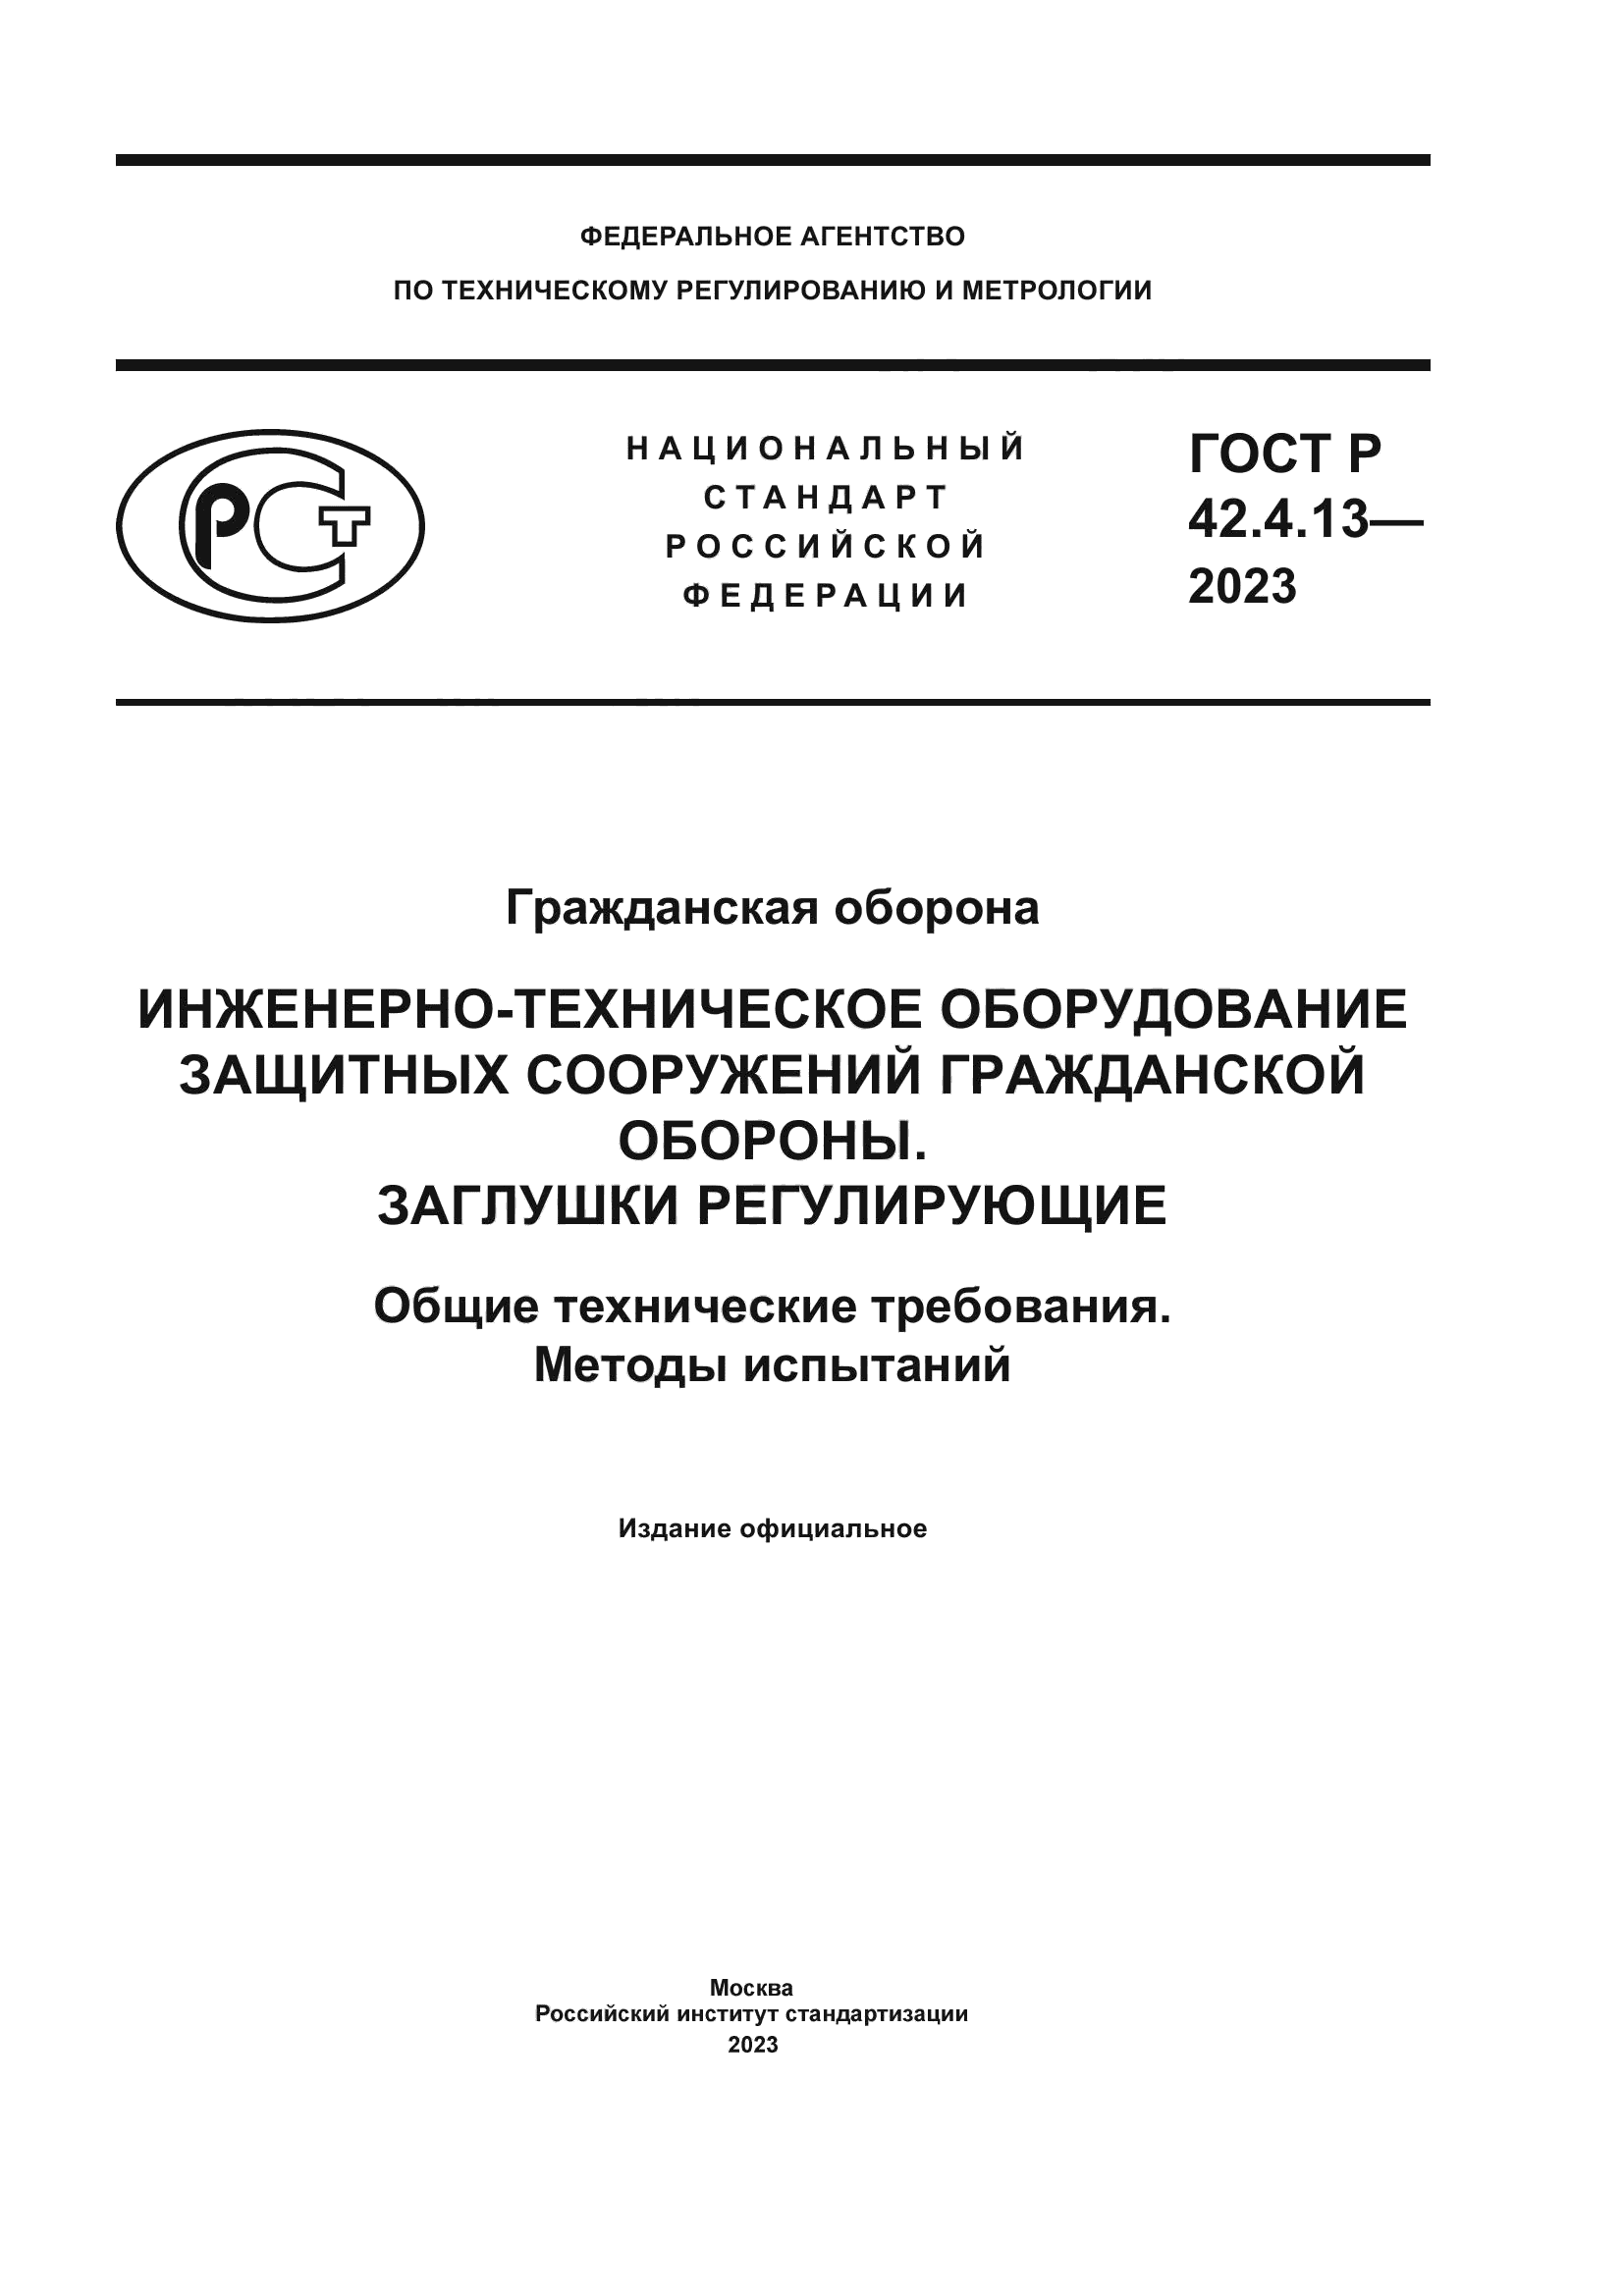 ГОСТ Р 42.4.13-2023